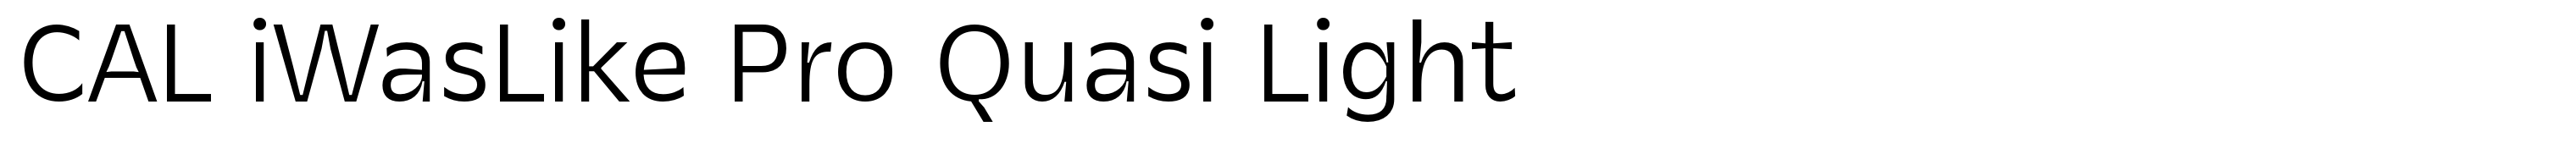 CAL iWasLike Pro Quasi Light